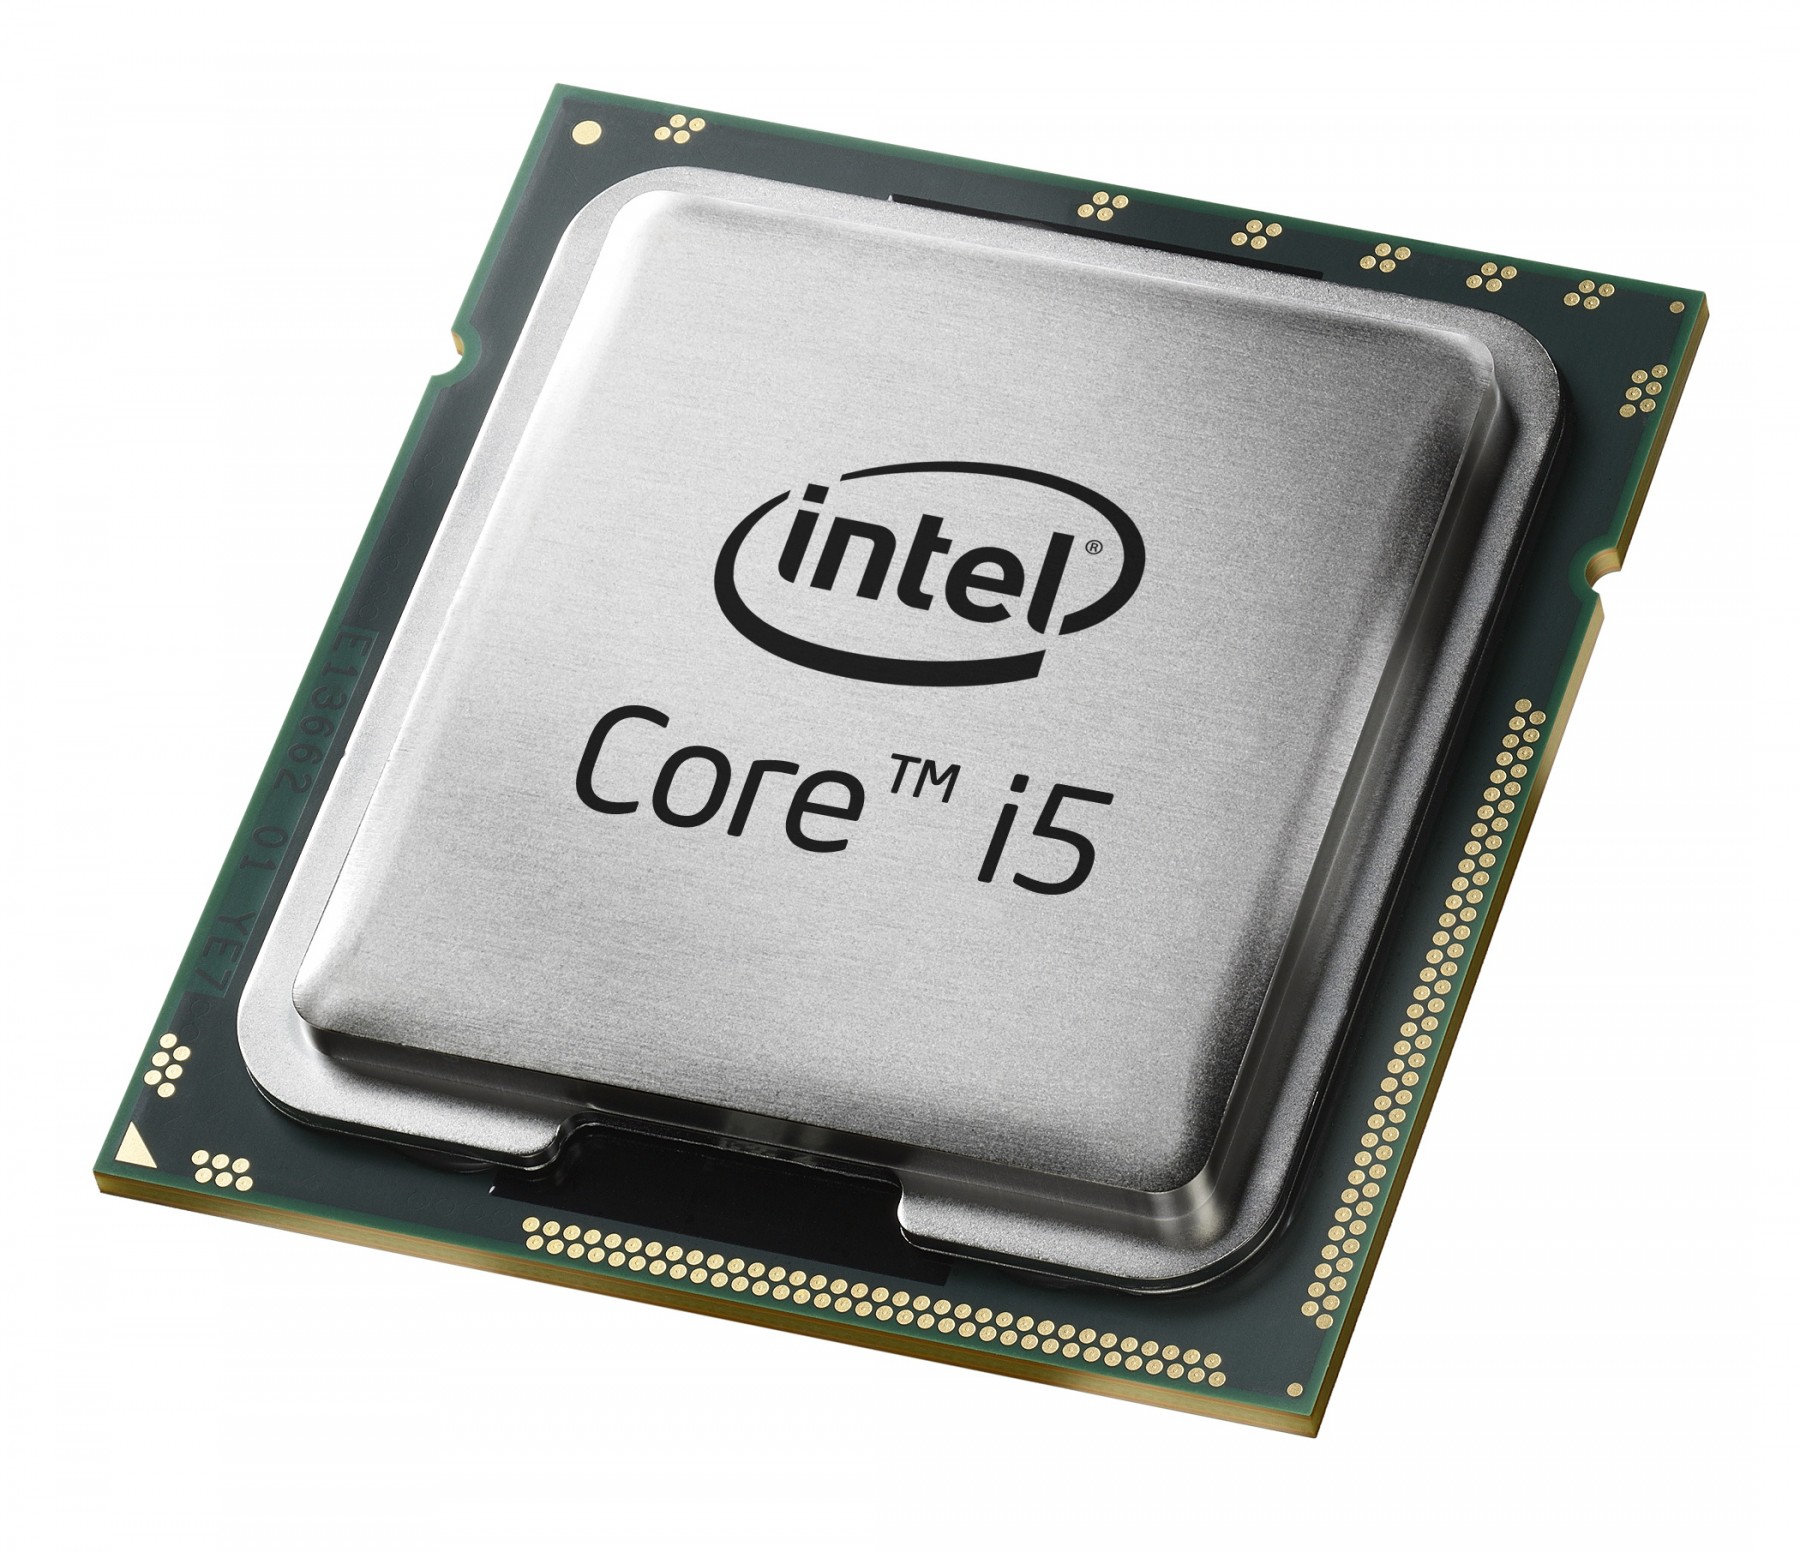 500030073-Intel Core i5-3570S SR0T9 3.1Ghz 5GT/s LGA 1155 Processor-image